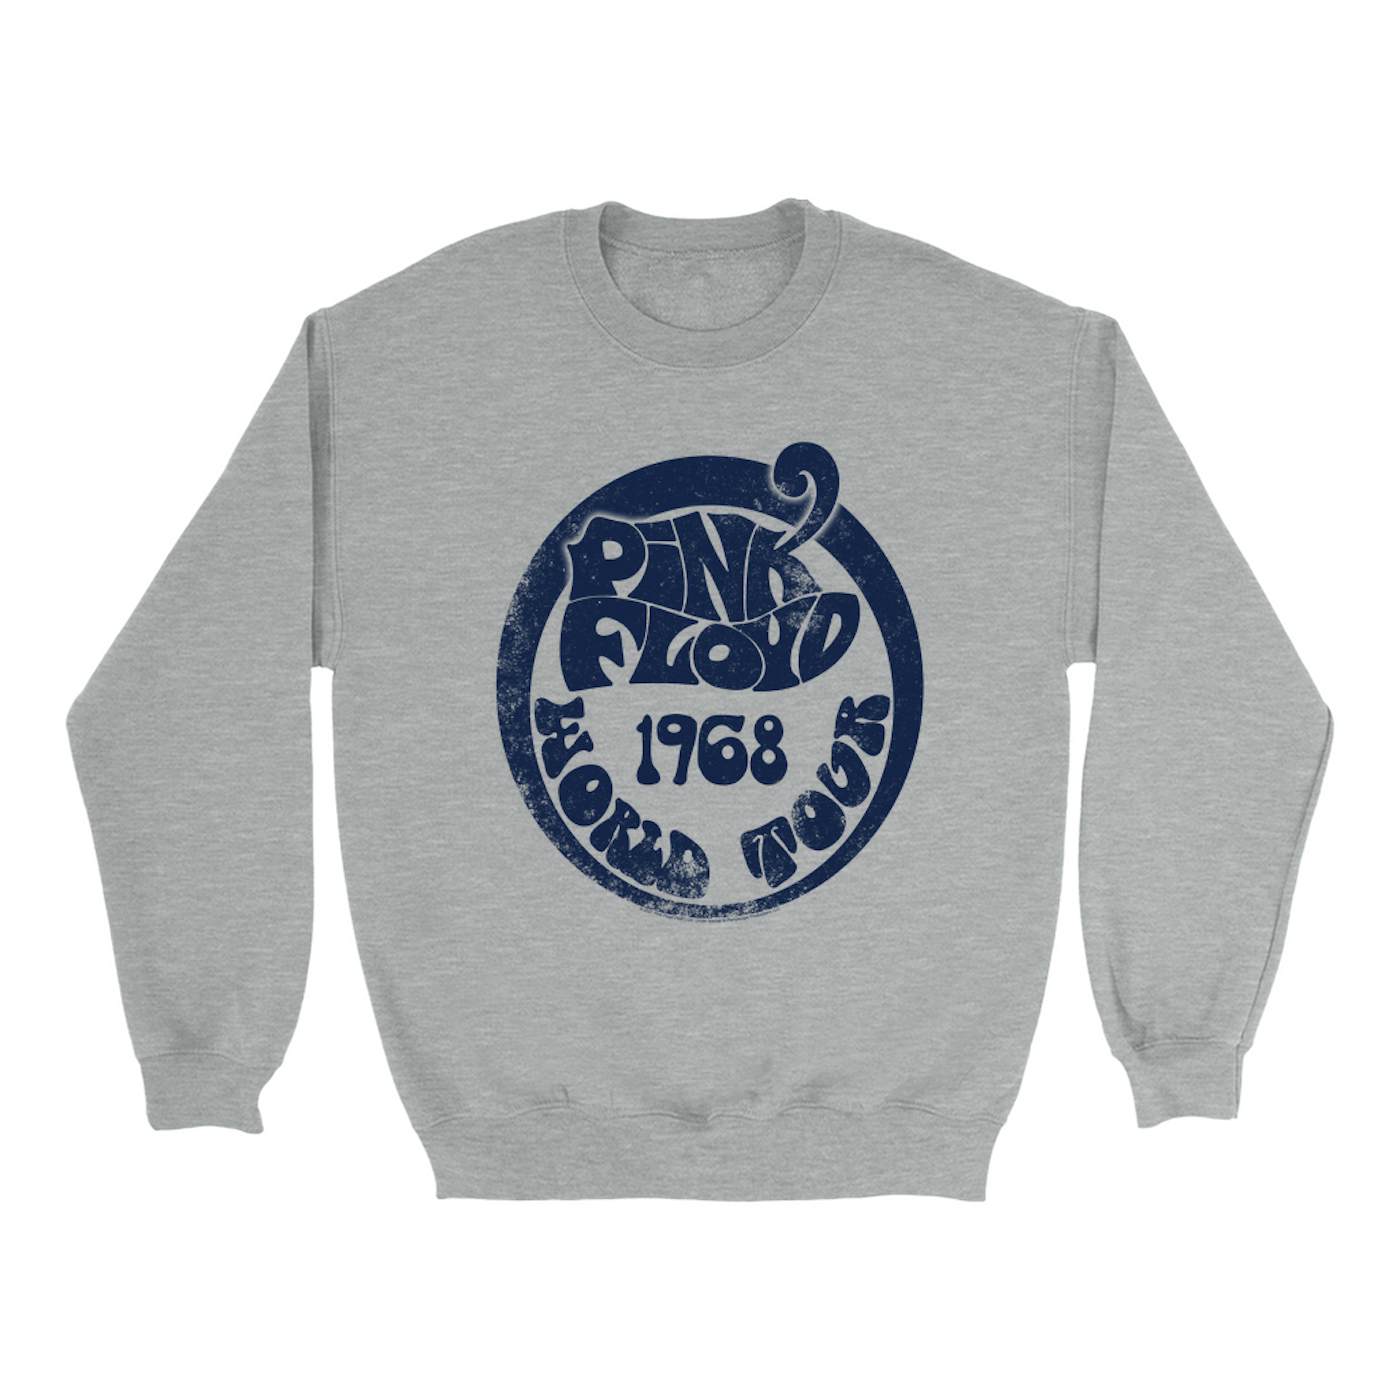 Groovy 1968 World Tour Design Distressed Sweatshirt